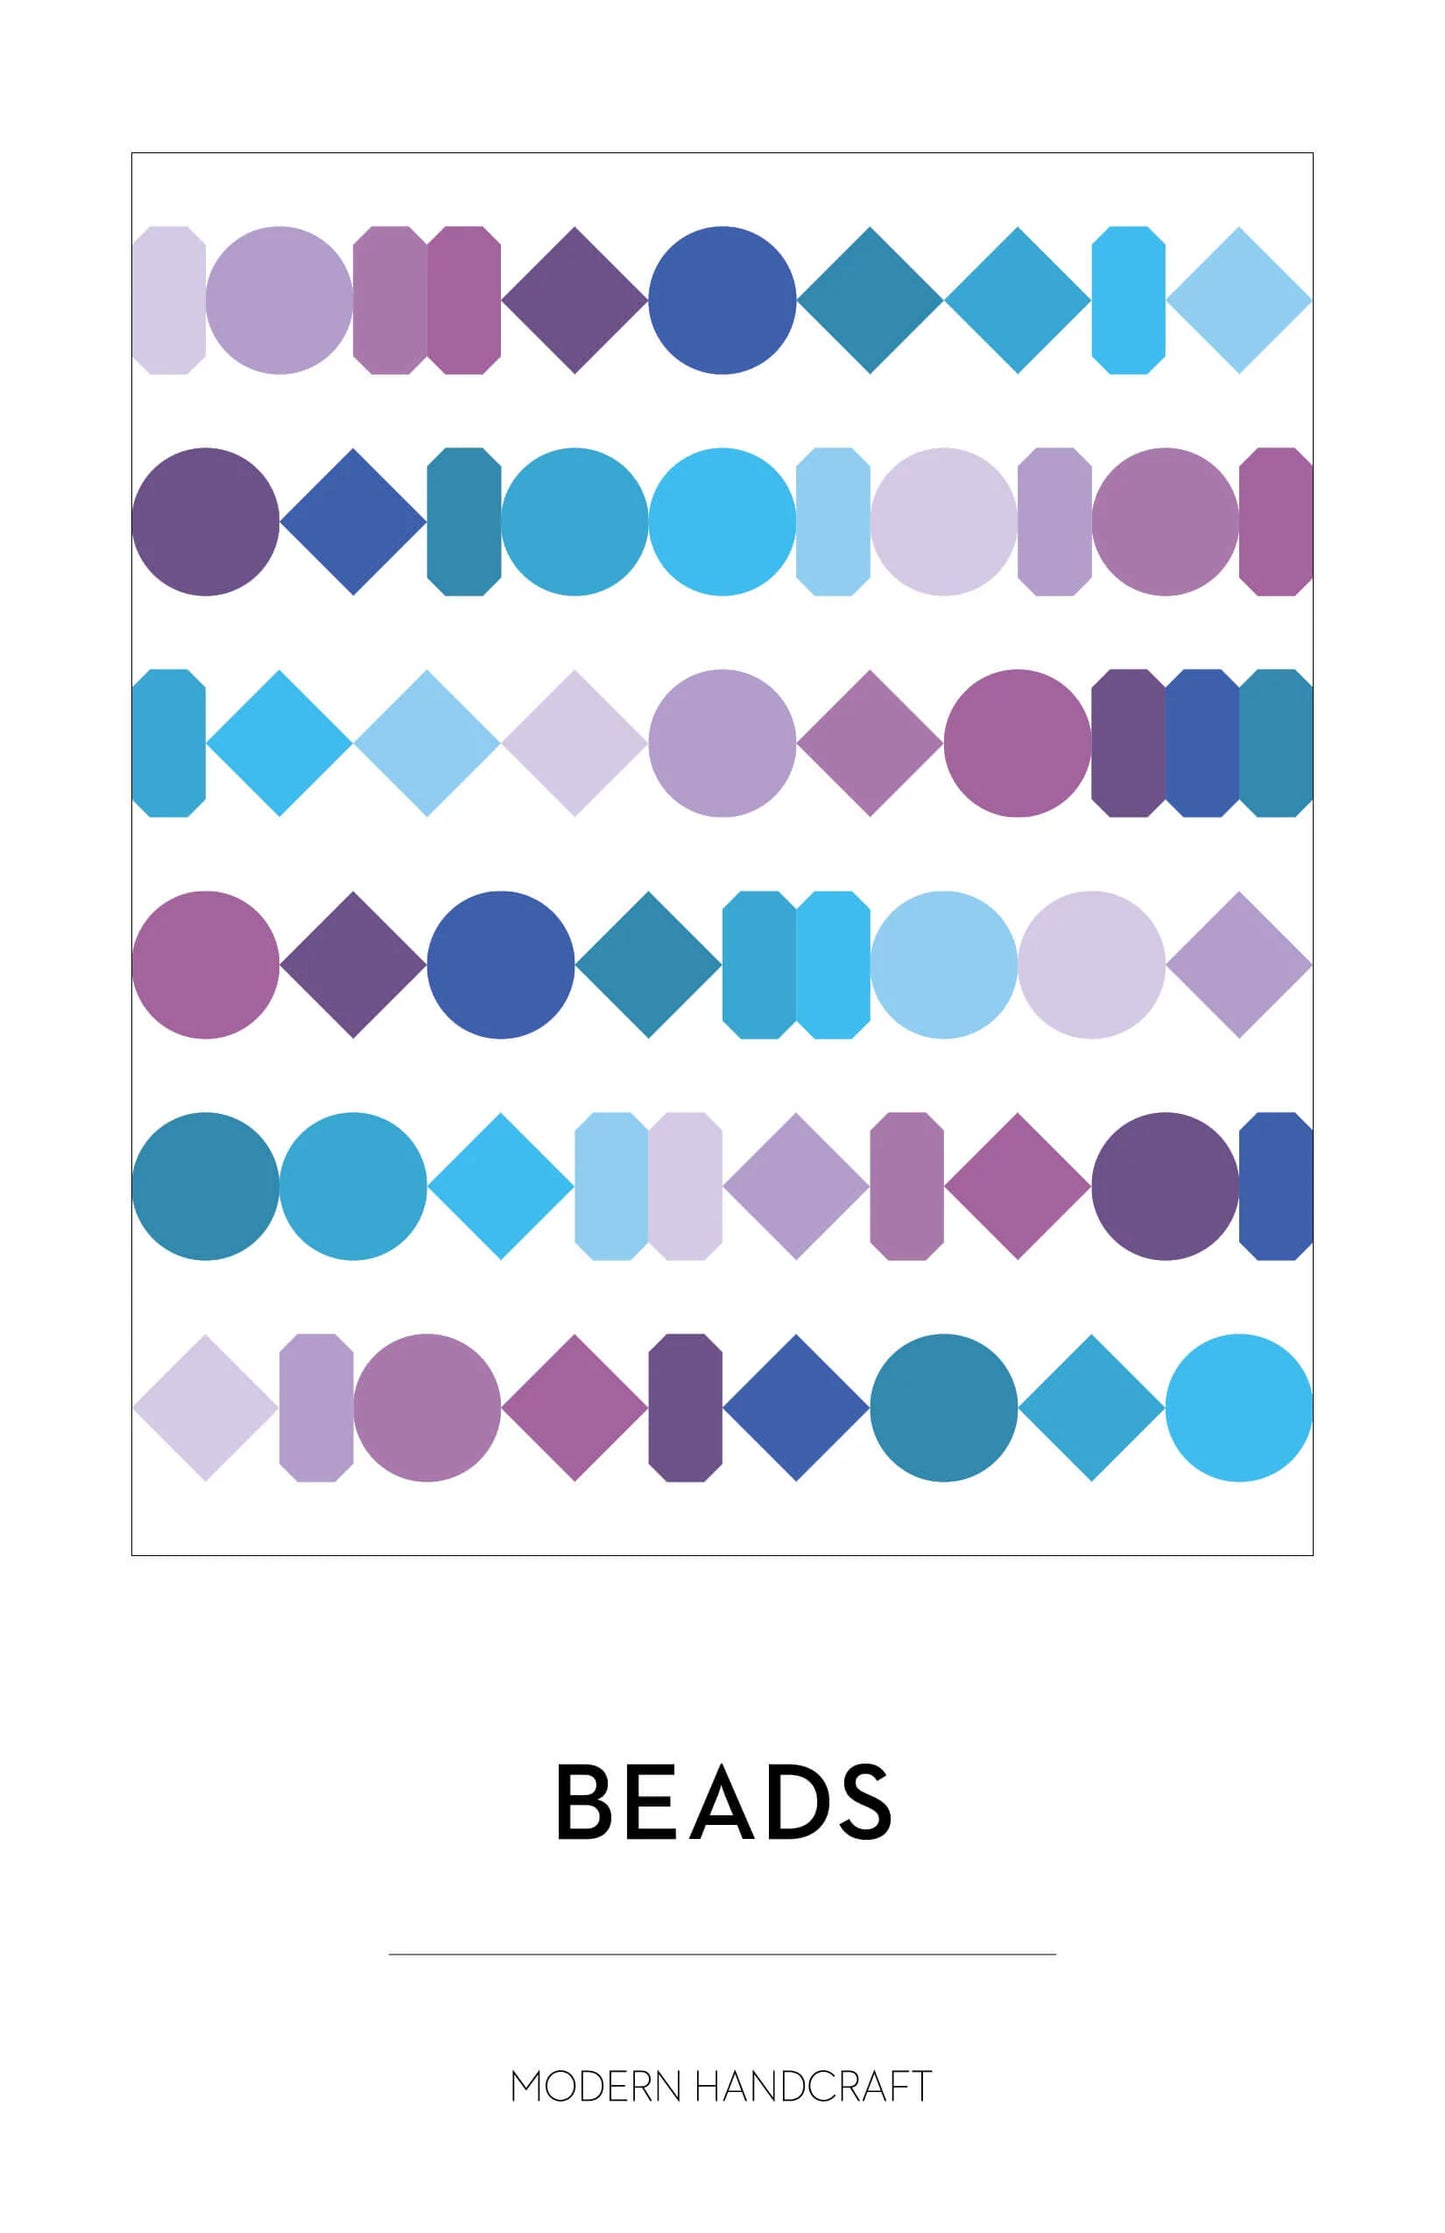 Beads by Modern Handcraft